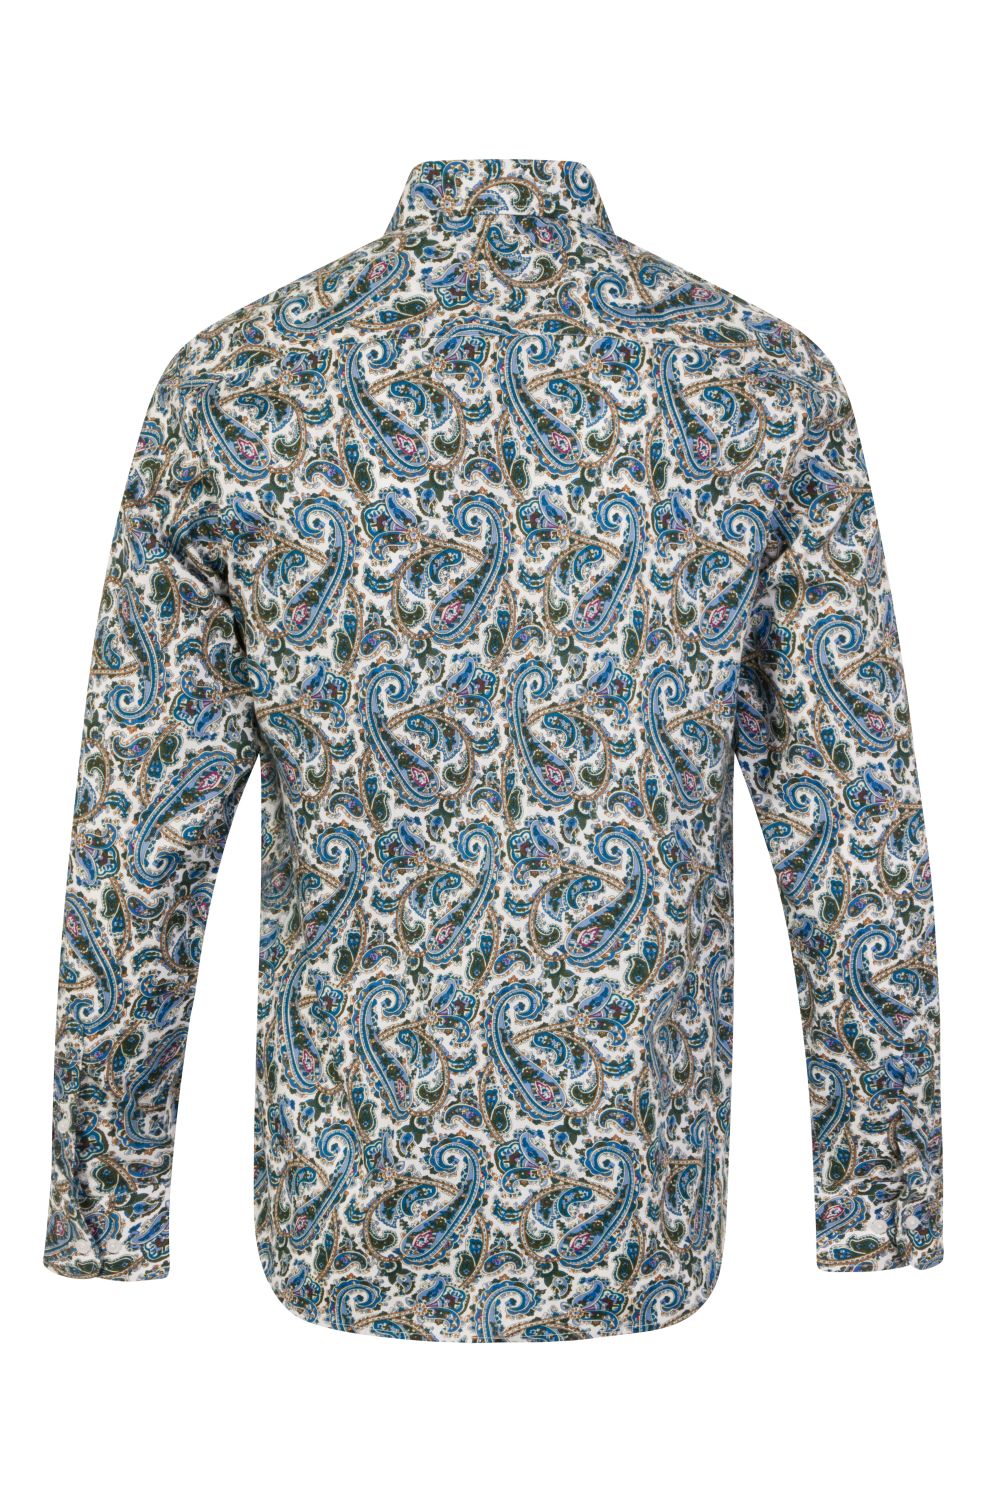 Paisley Blue & White Regular Fit 100% Cotton Shirt